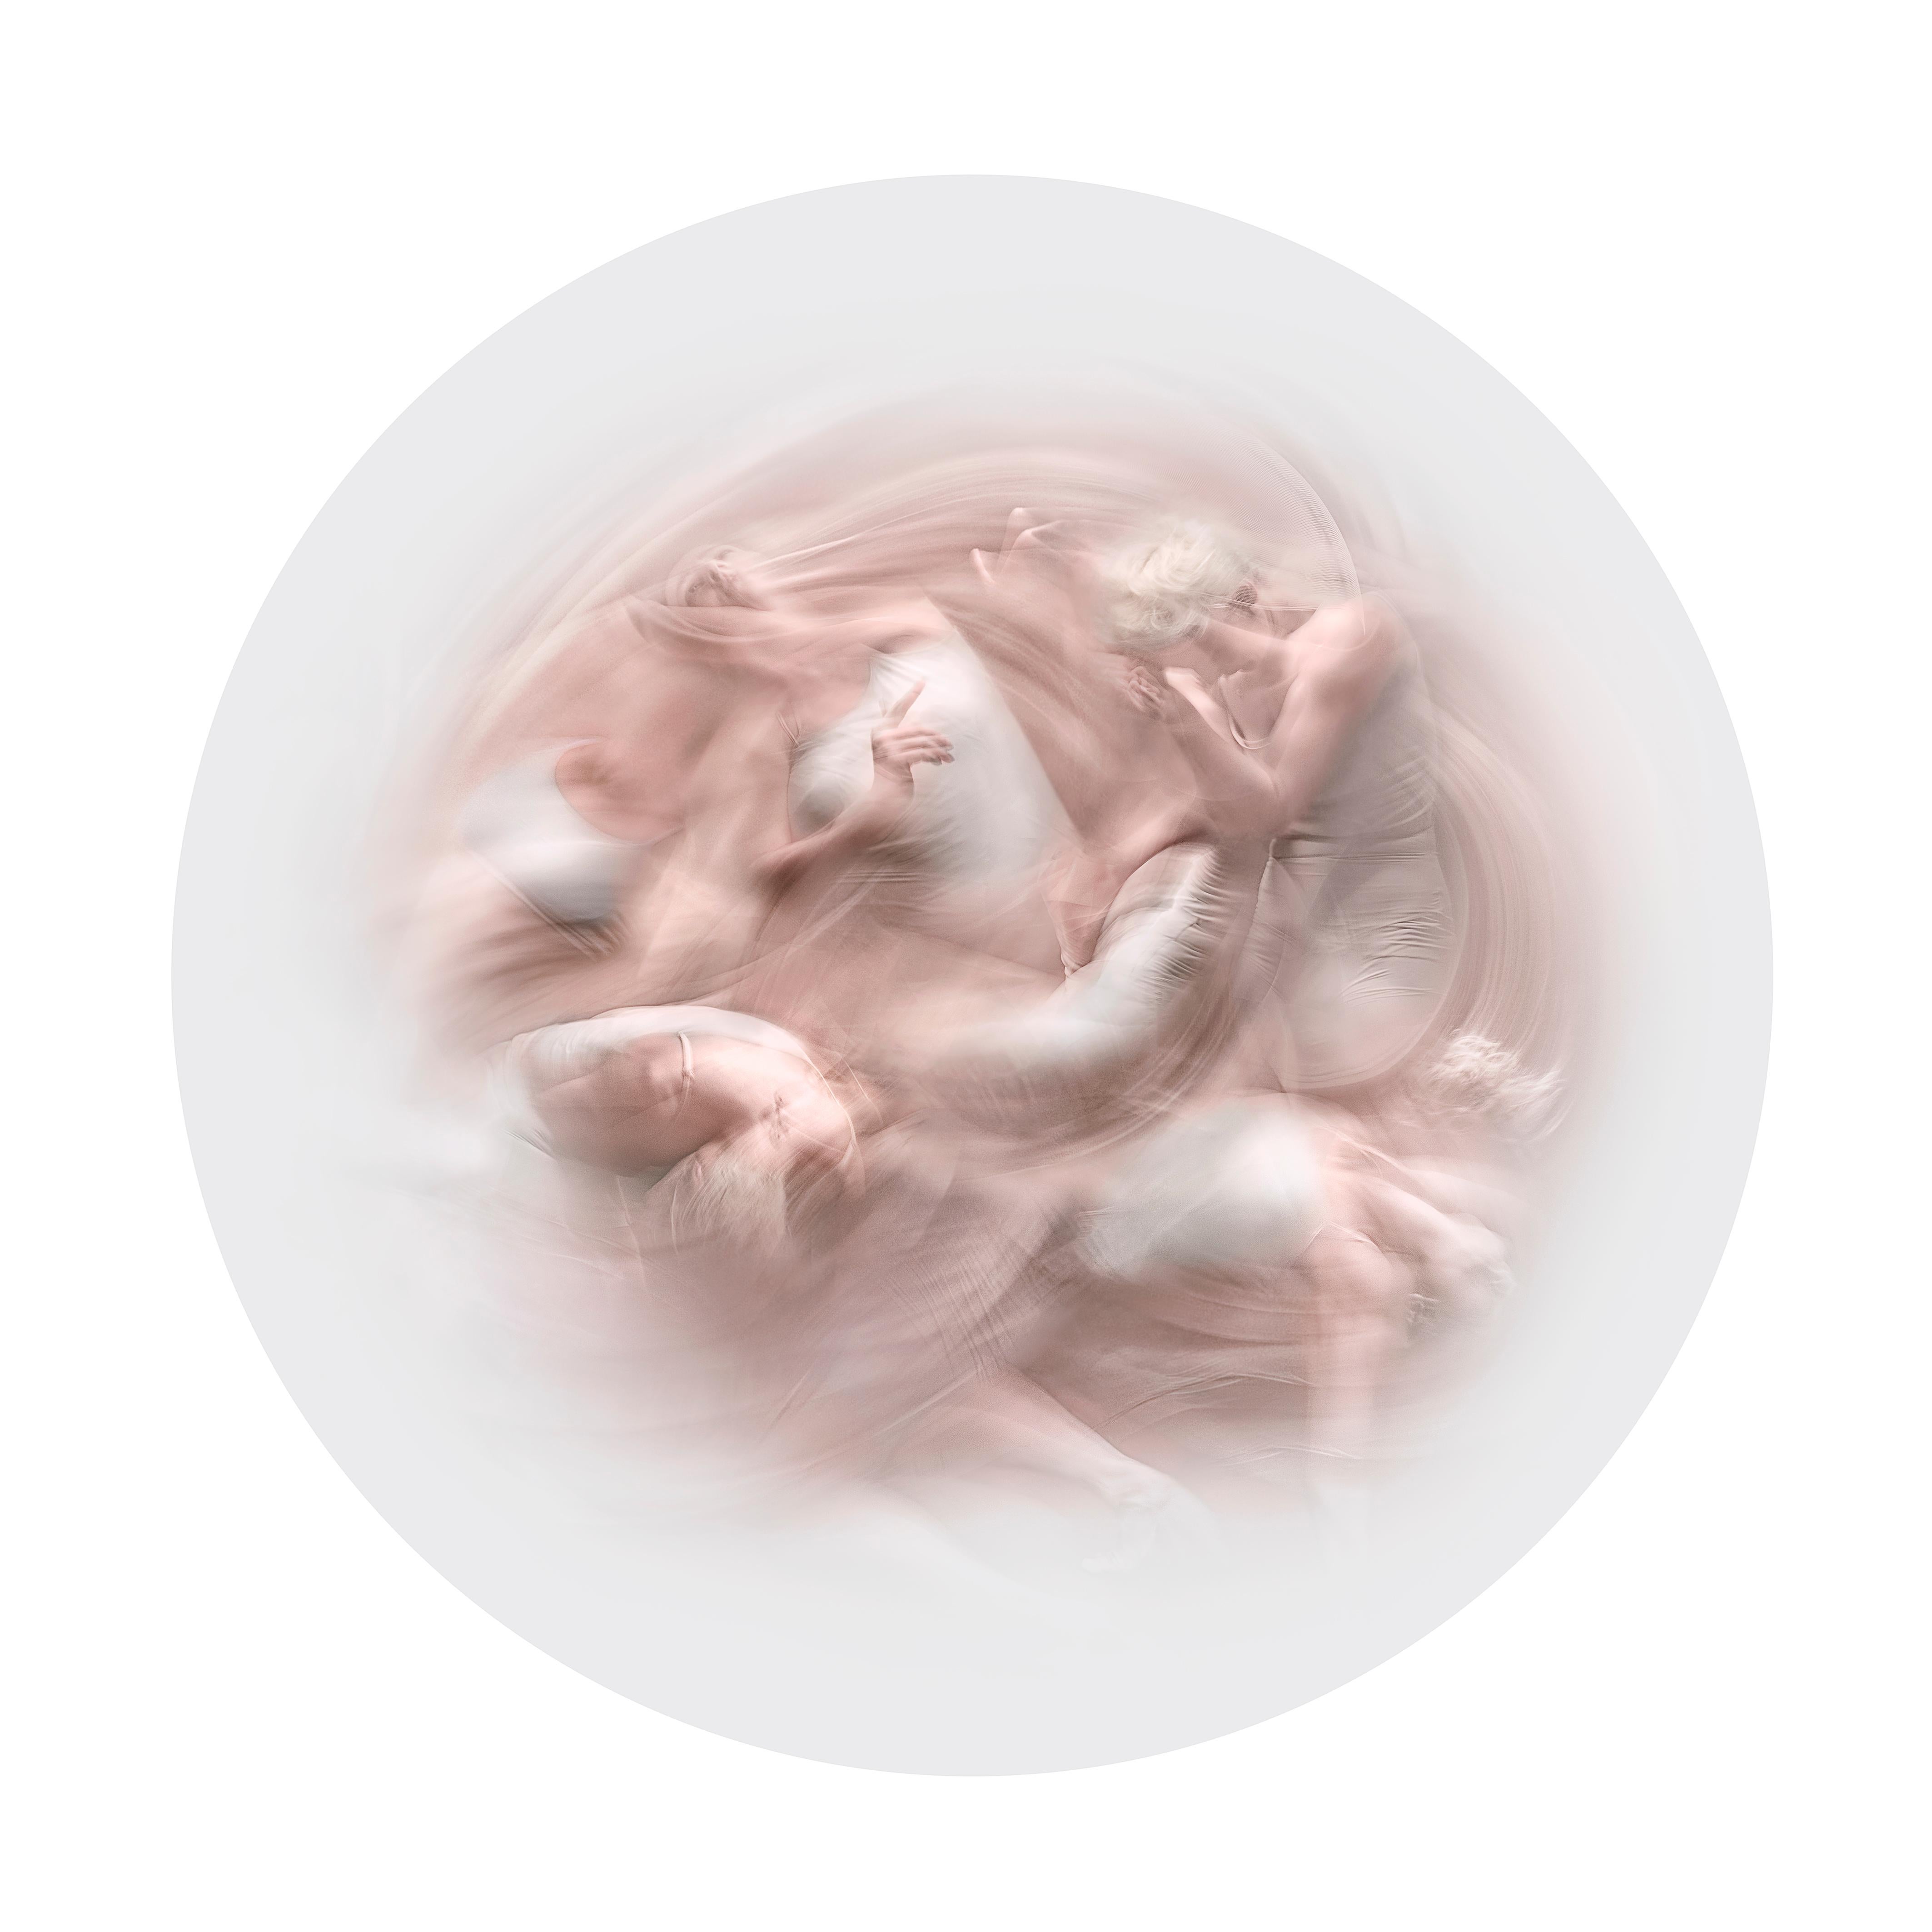  Ali Alışır Abstract Print - Hybrid Souls 09 (51.18" x 51.18")